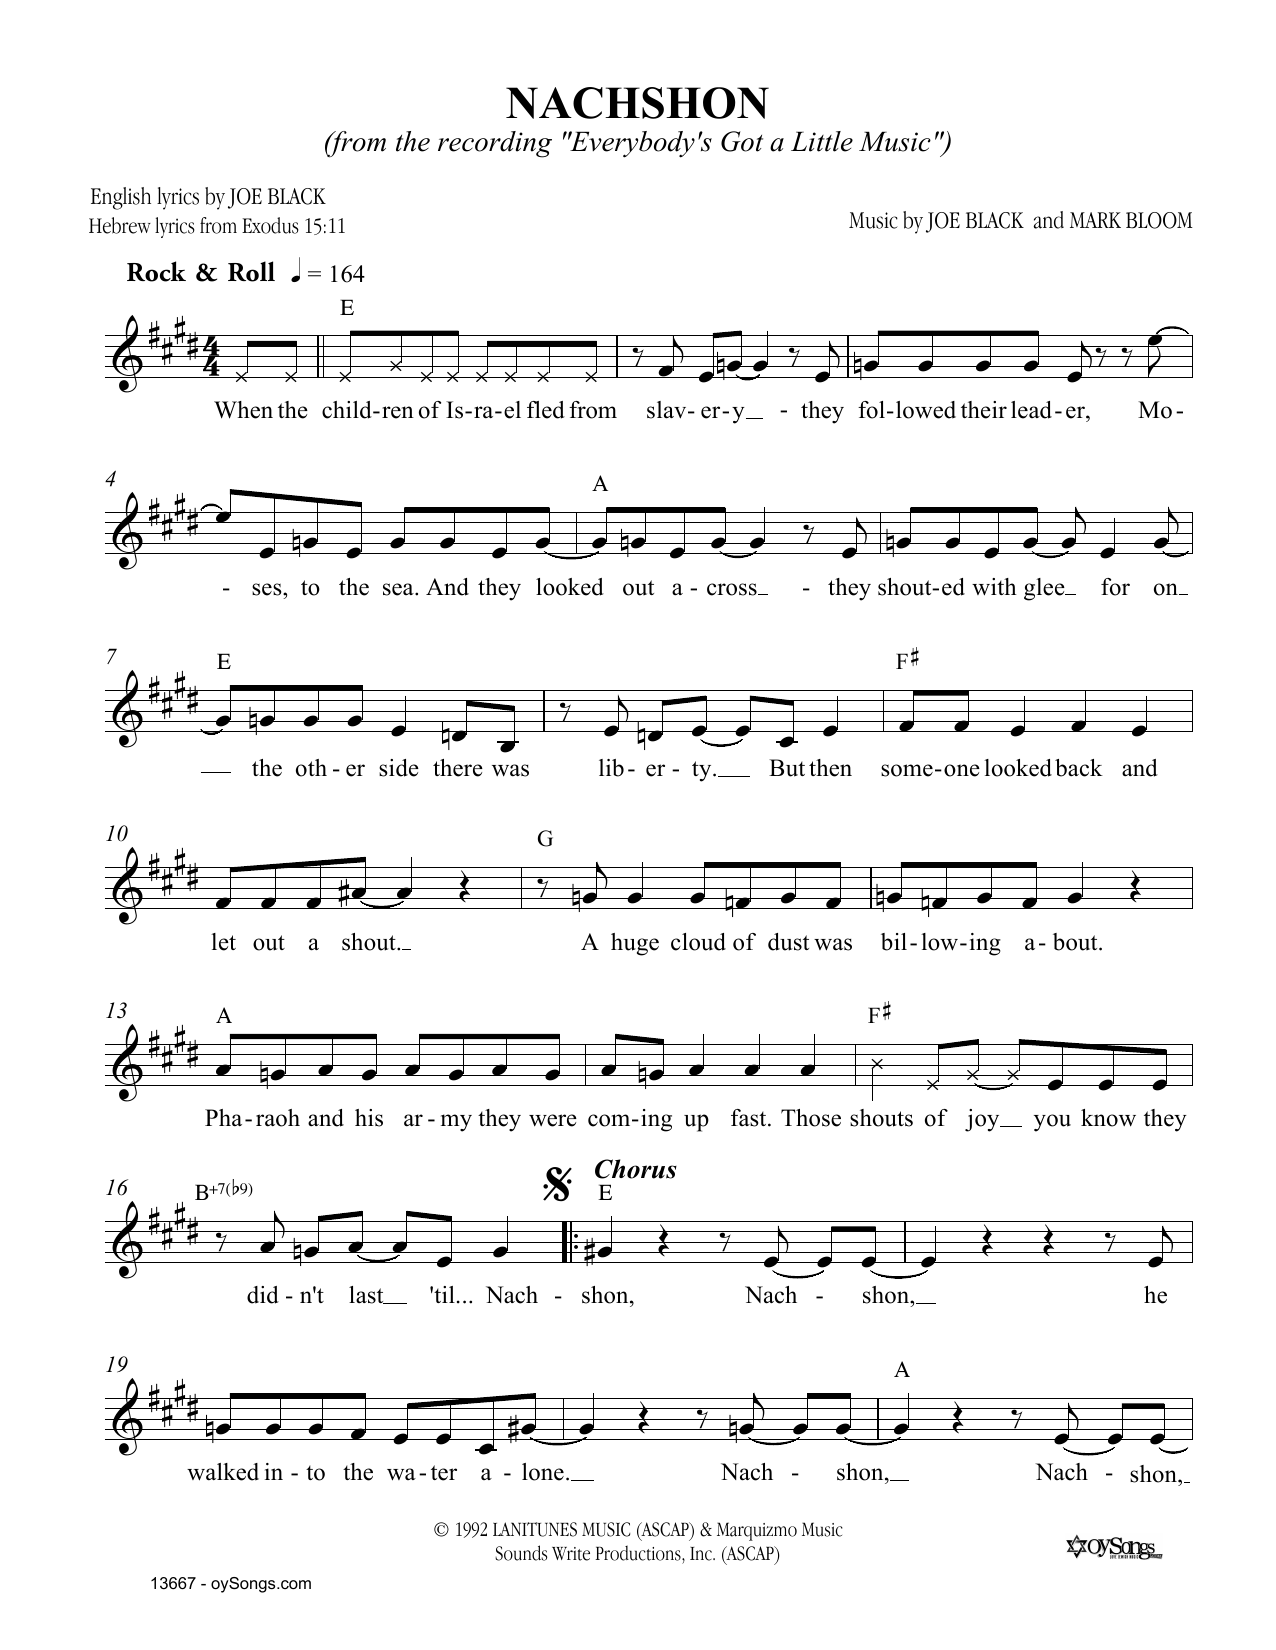 Joe Black Nachshon sheet music notes and chords arranged for Lead Sheet / Fake Book